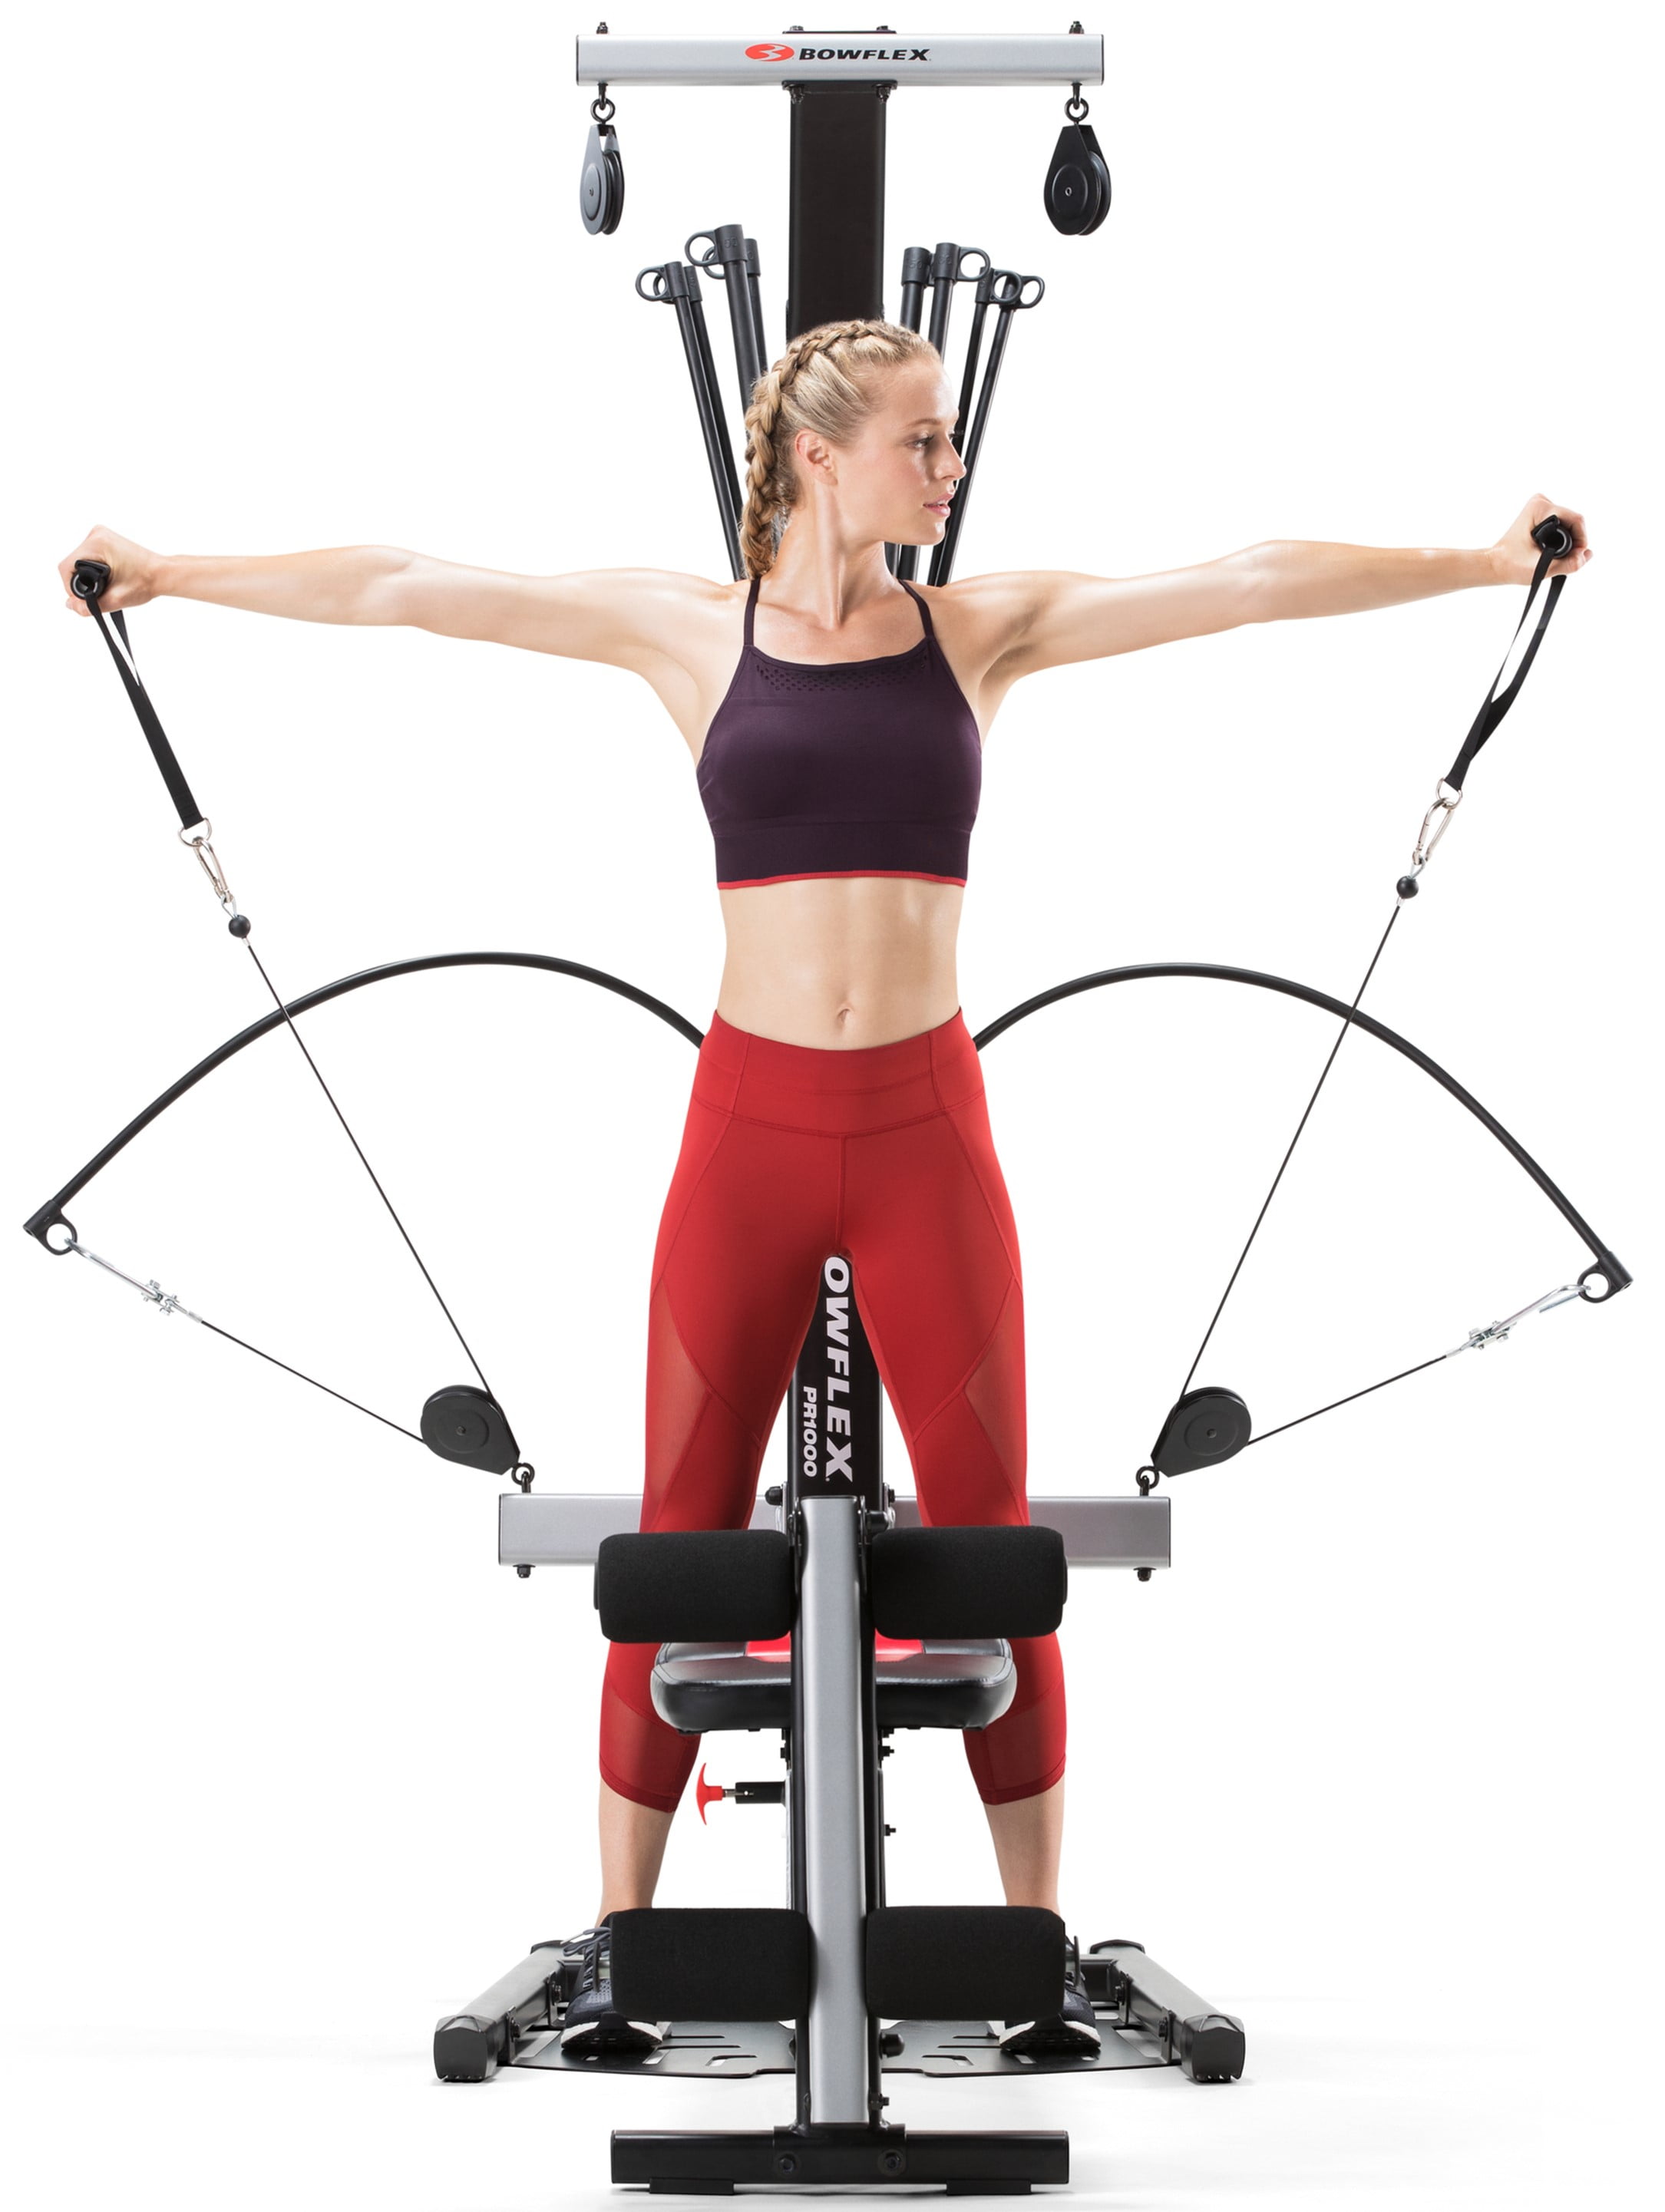 Bowflex Pr1000 Home Gym Weight Lifting